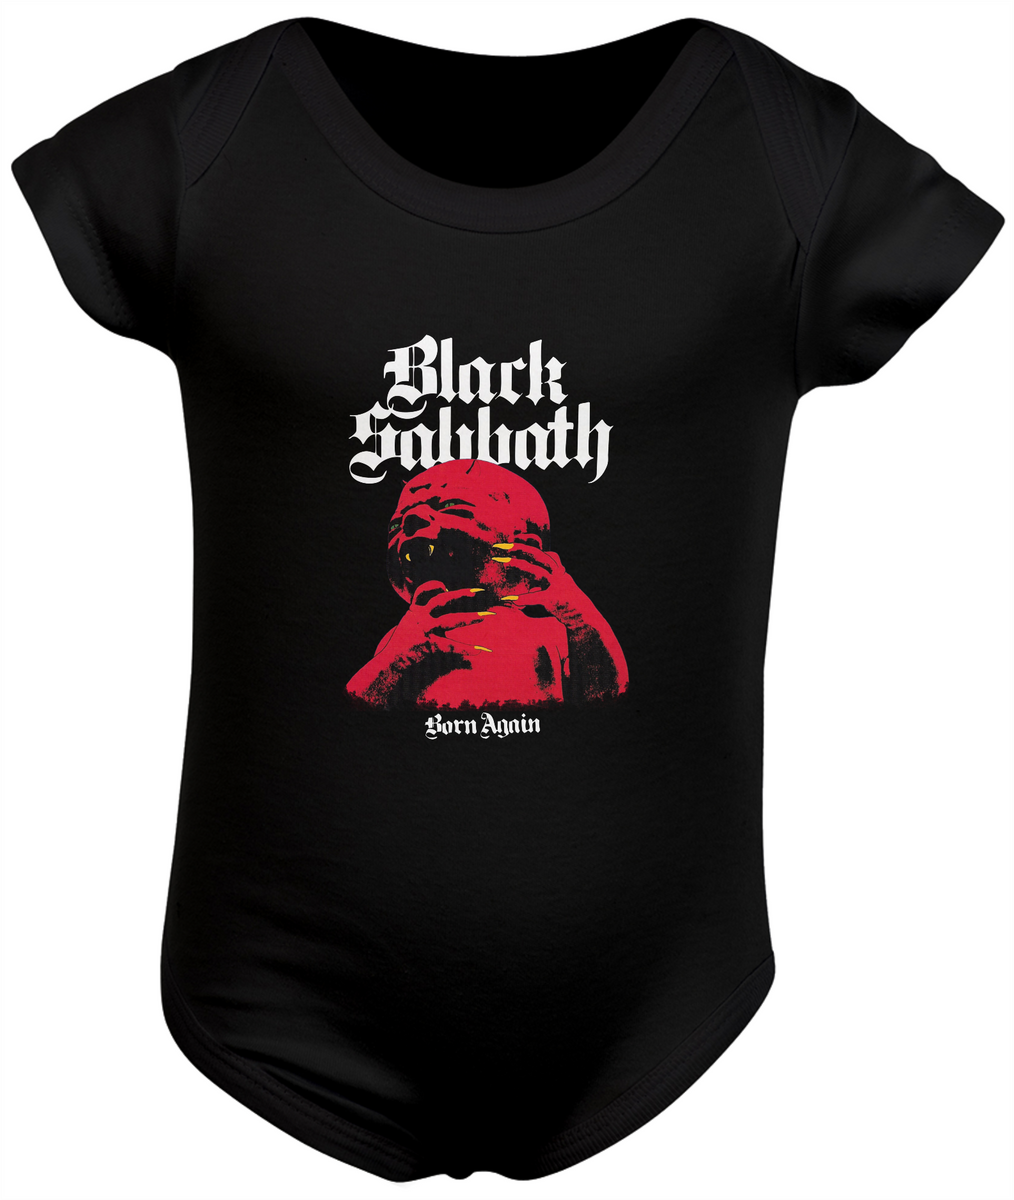 Nome do produto: Black Sabbath - Born Again (Body Infantil)